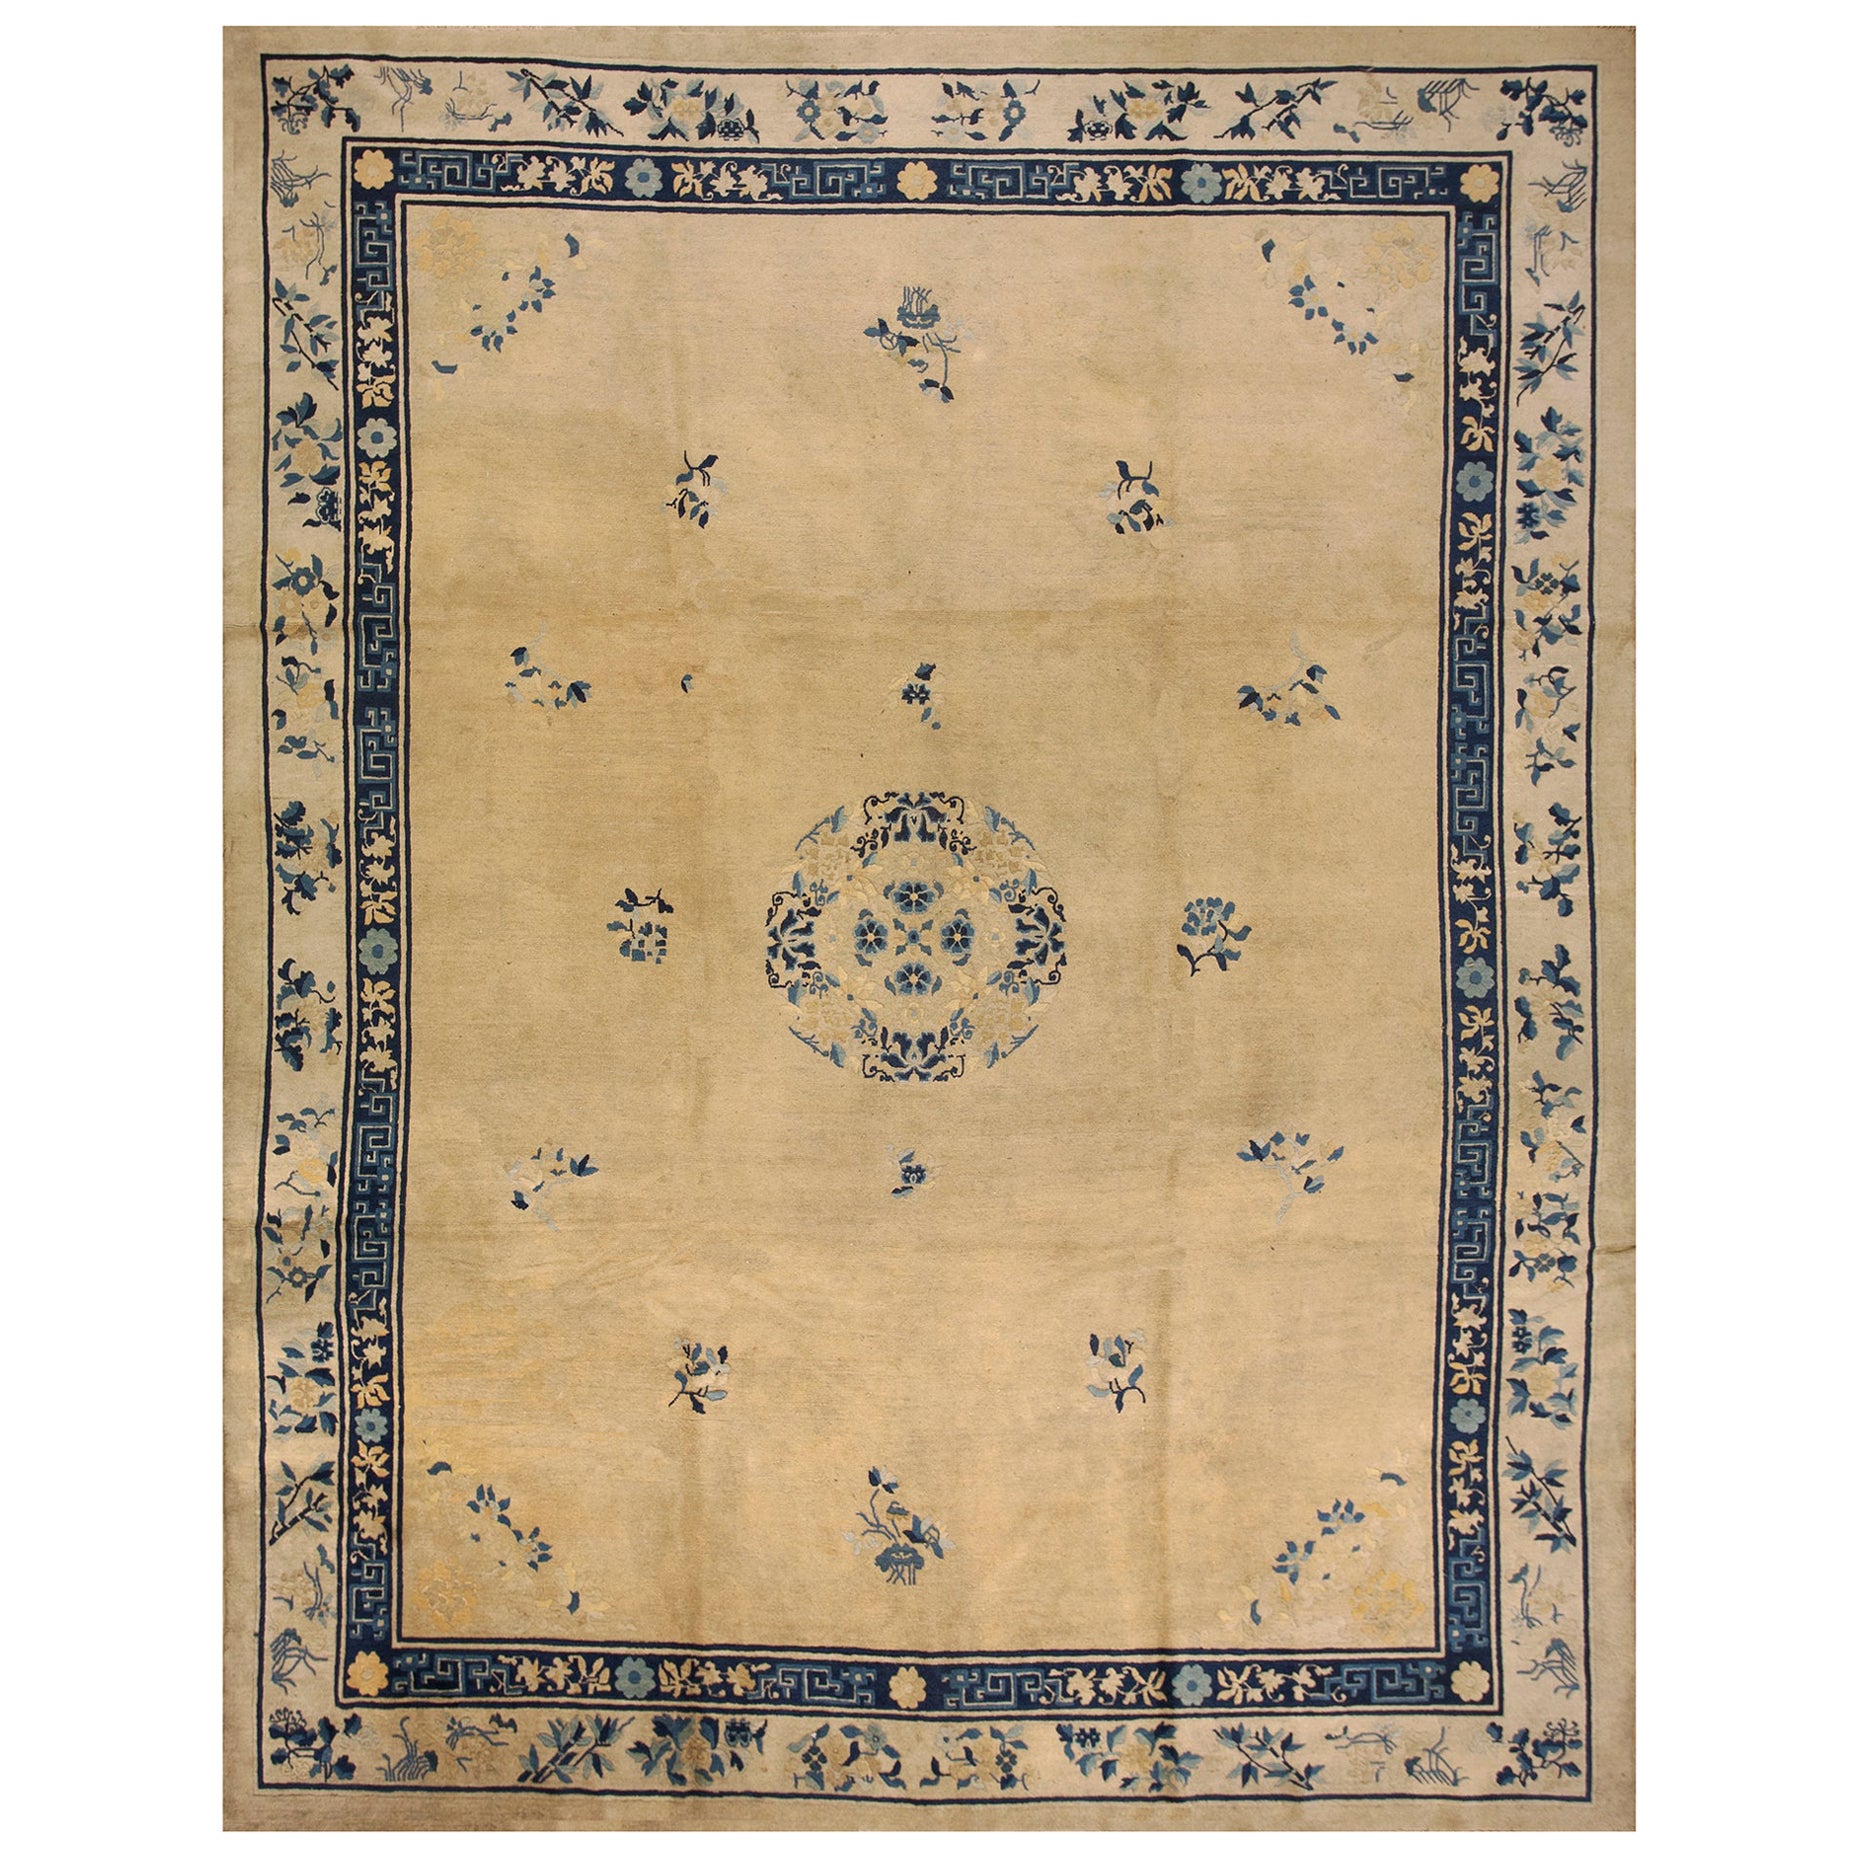 Early 20th Century Chinese Peking Carpet ( 9'1" x 11'7" - 275 x 353 )